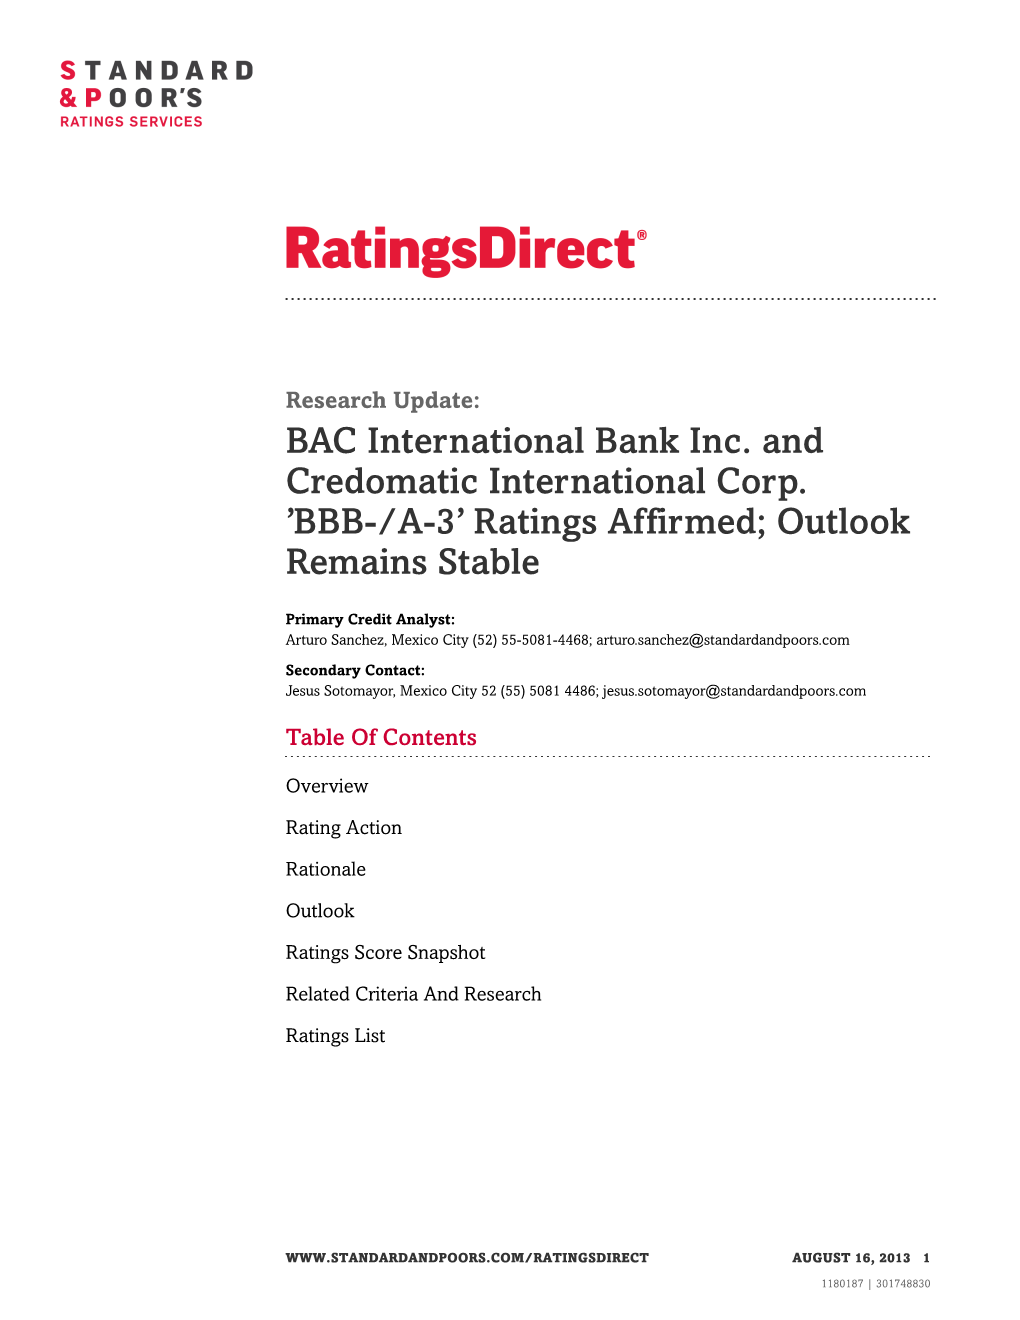 BAC International Bank Inc. and Credomatic International Corp